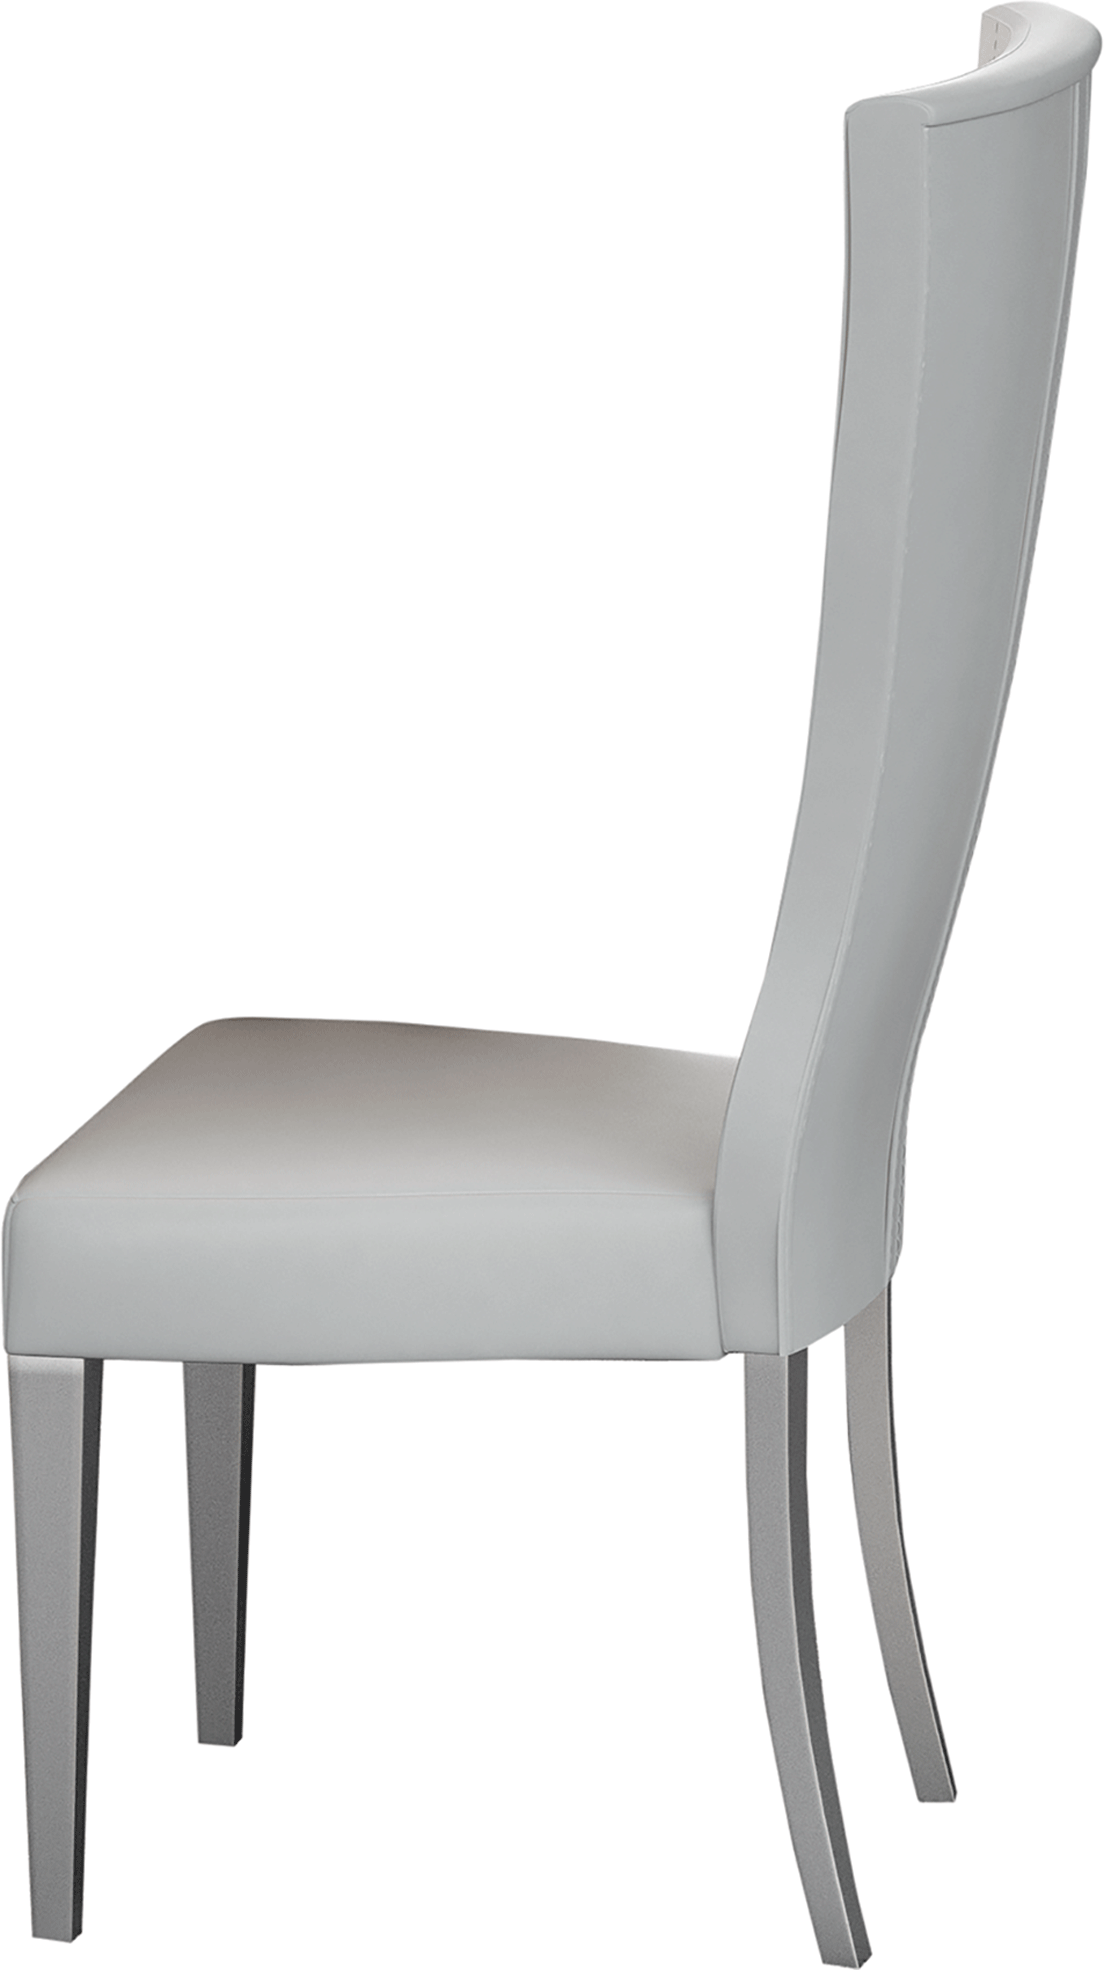 Dining Room Furniture Tables Kiu Side Chair